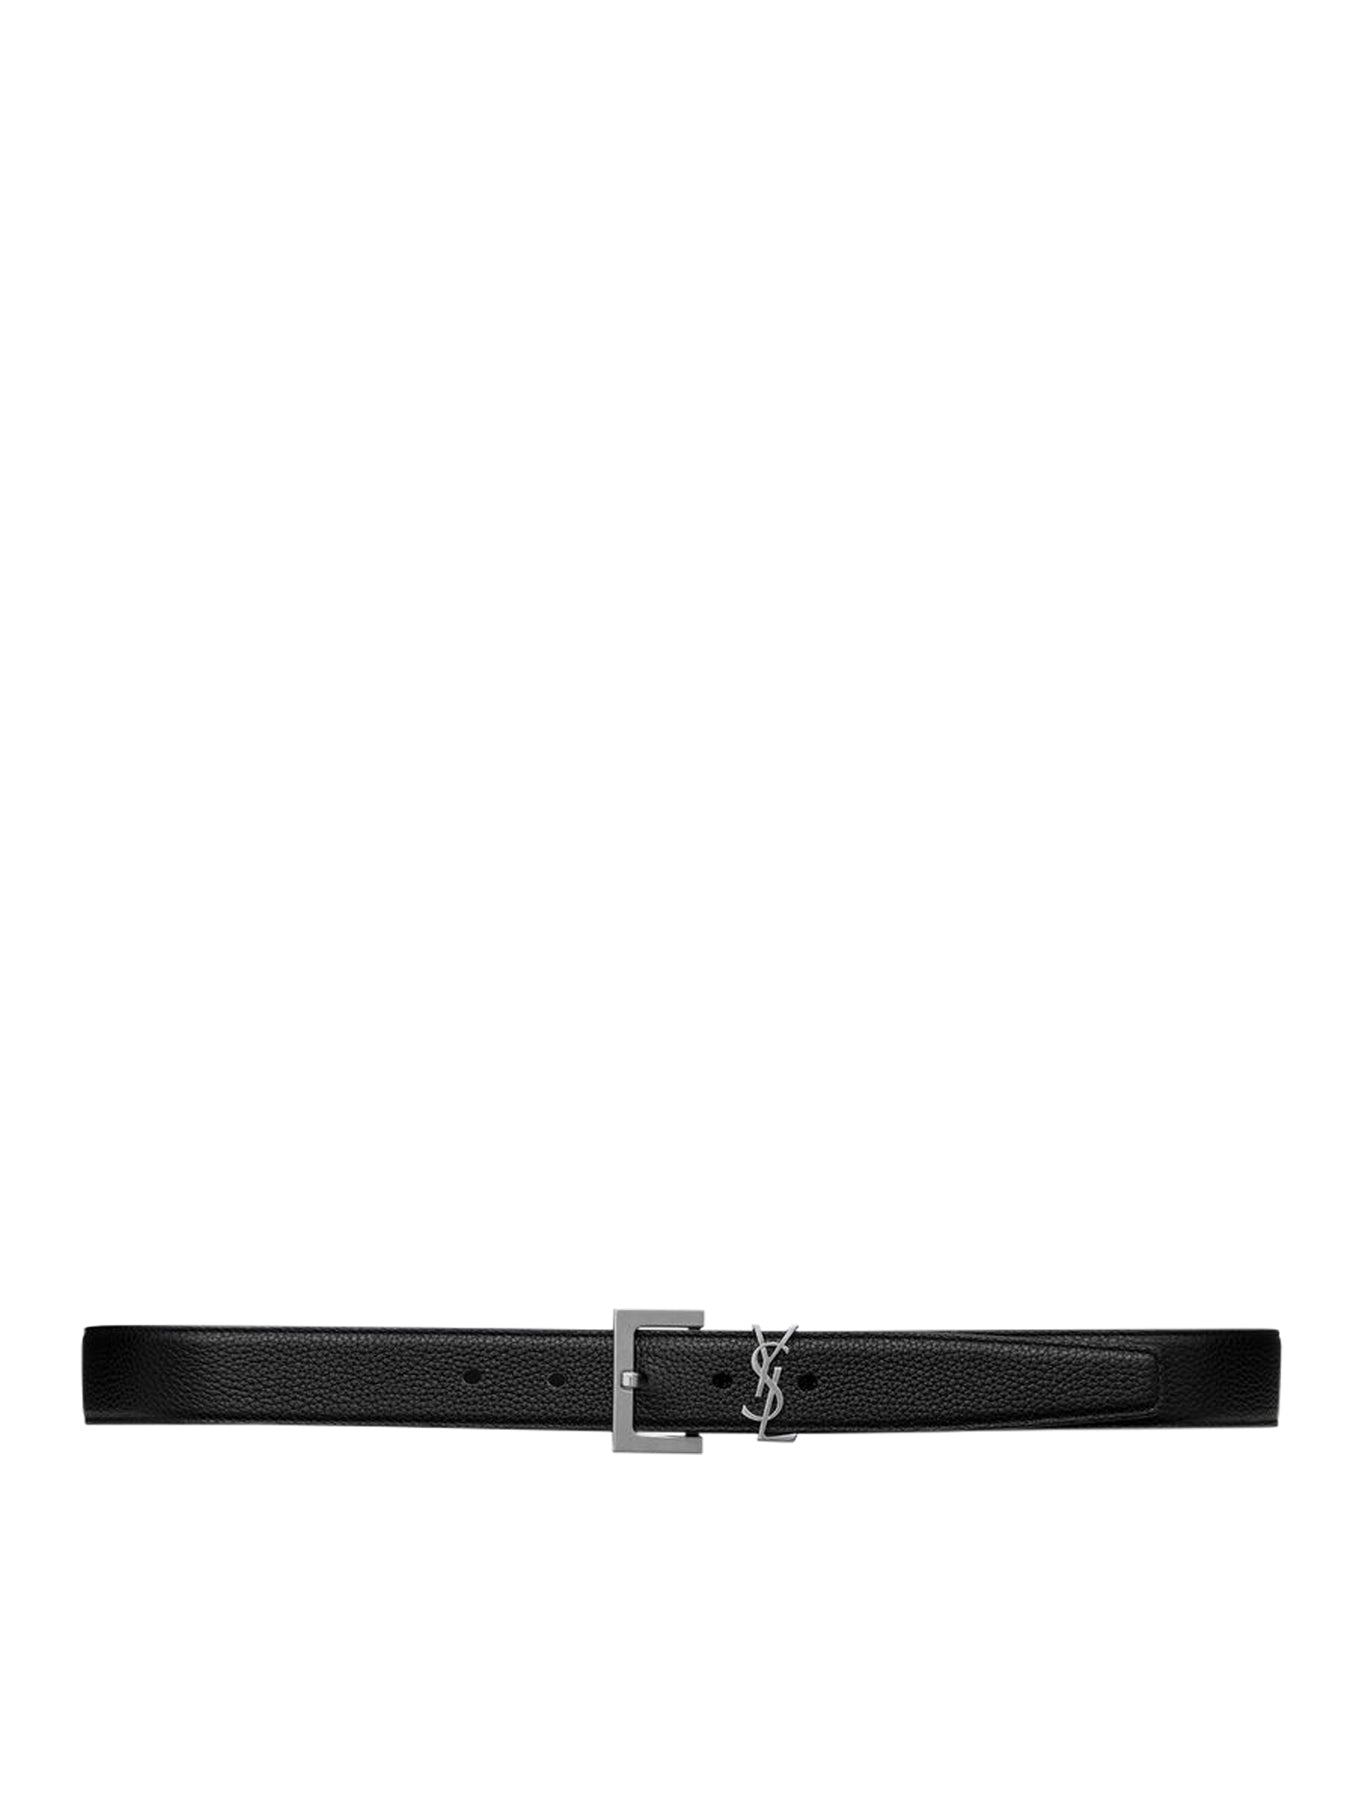 Saint Laurent YSL Monogram Leather Belt Black Sz.100 EU